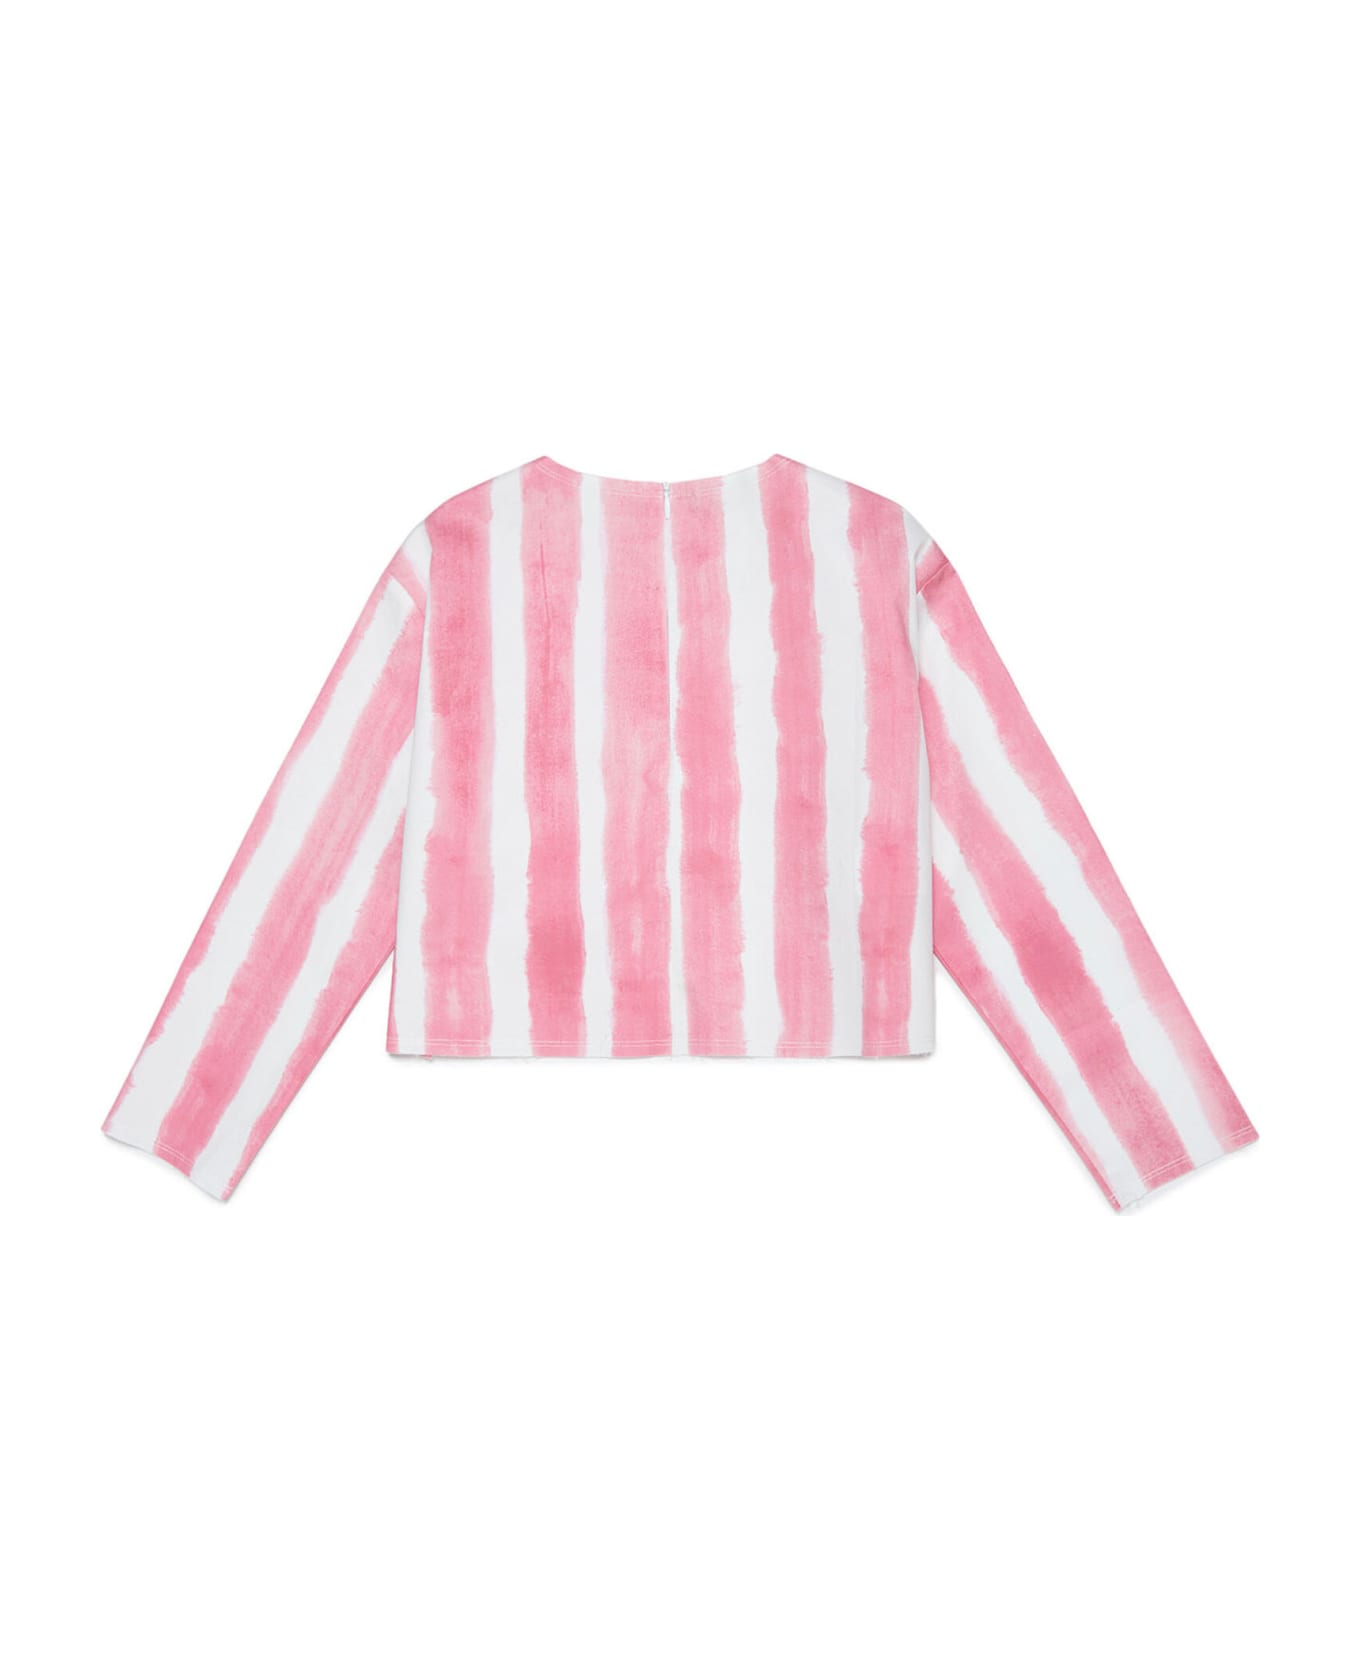 Marni Mc95f Shirt Marni Peachy Pink Shirt In Gabardine With Allover Striped Pattern - Peach blossom